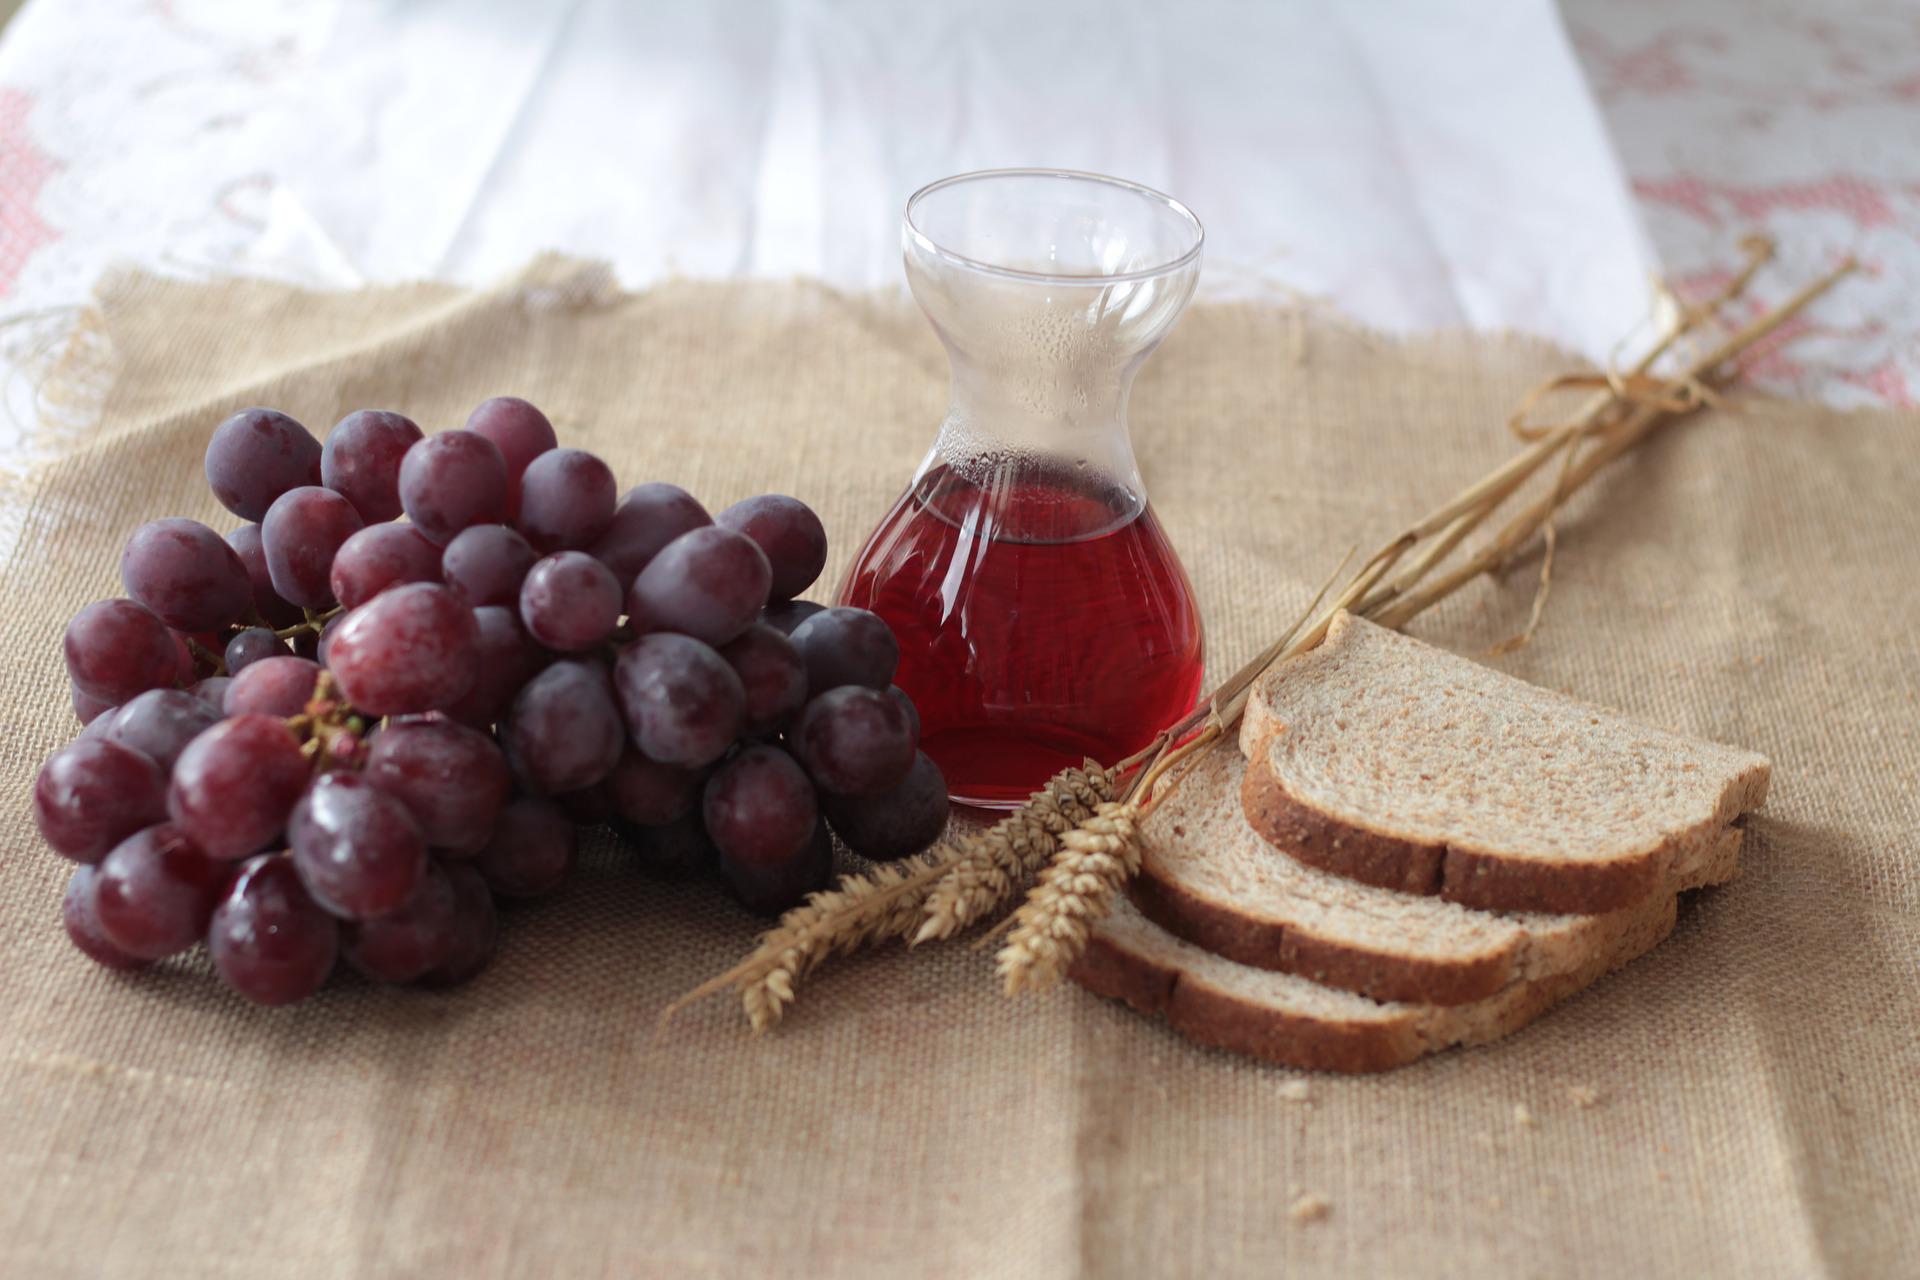 Bread, wine, and grapes